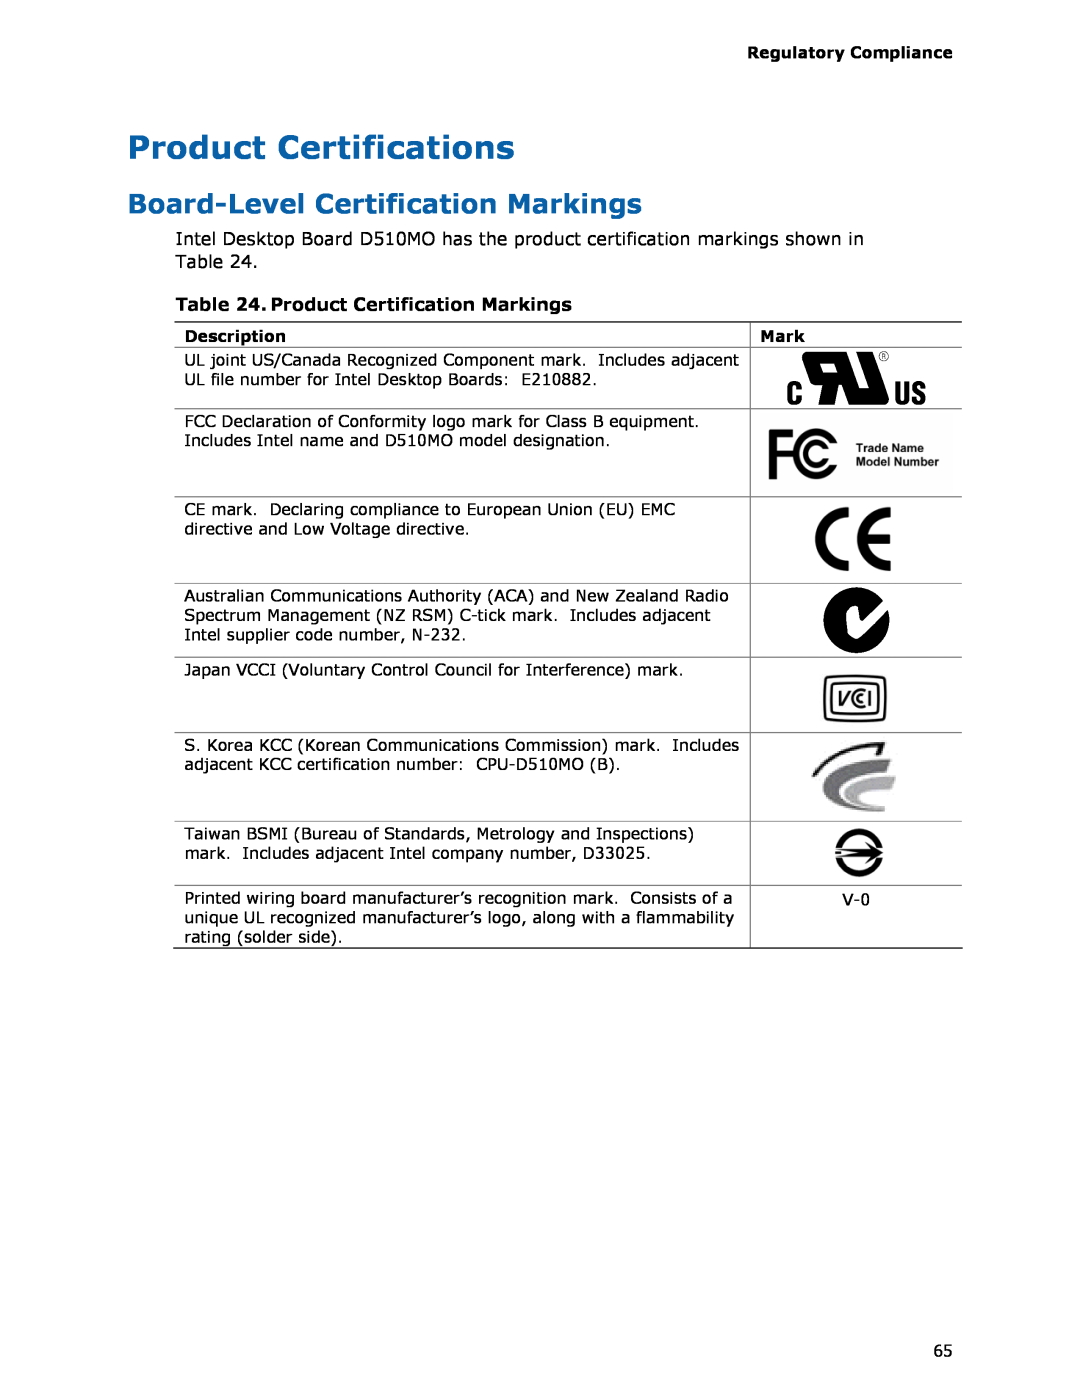 Intel D510MO manual Product Certifications, Board-Level Certification Markings, Product Certification Markings 